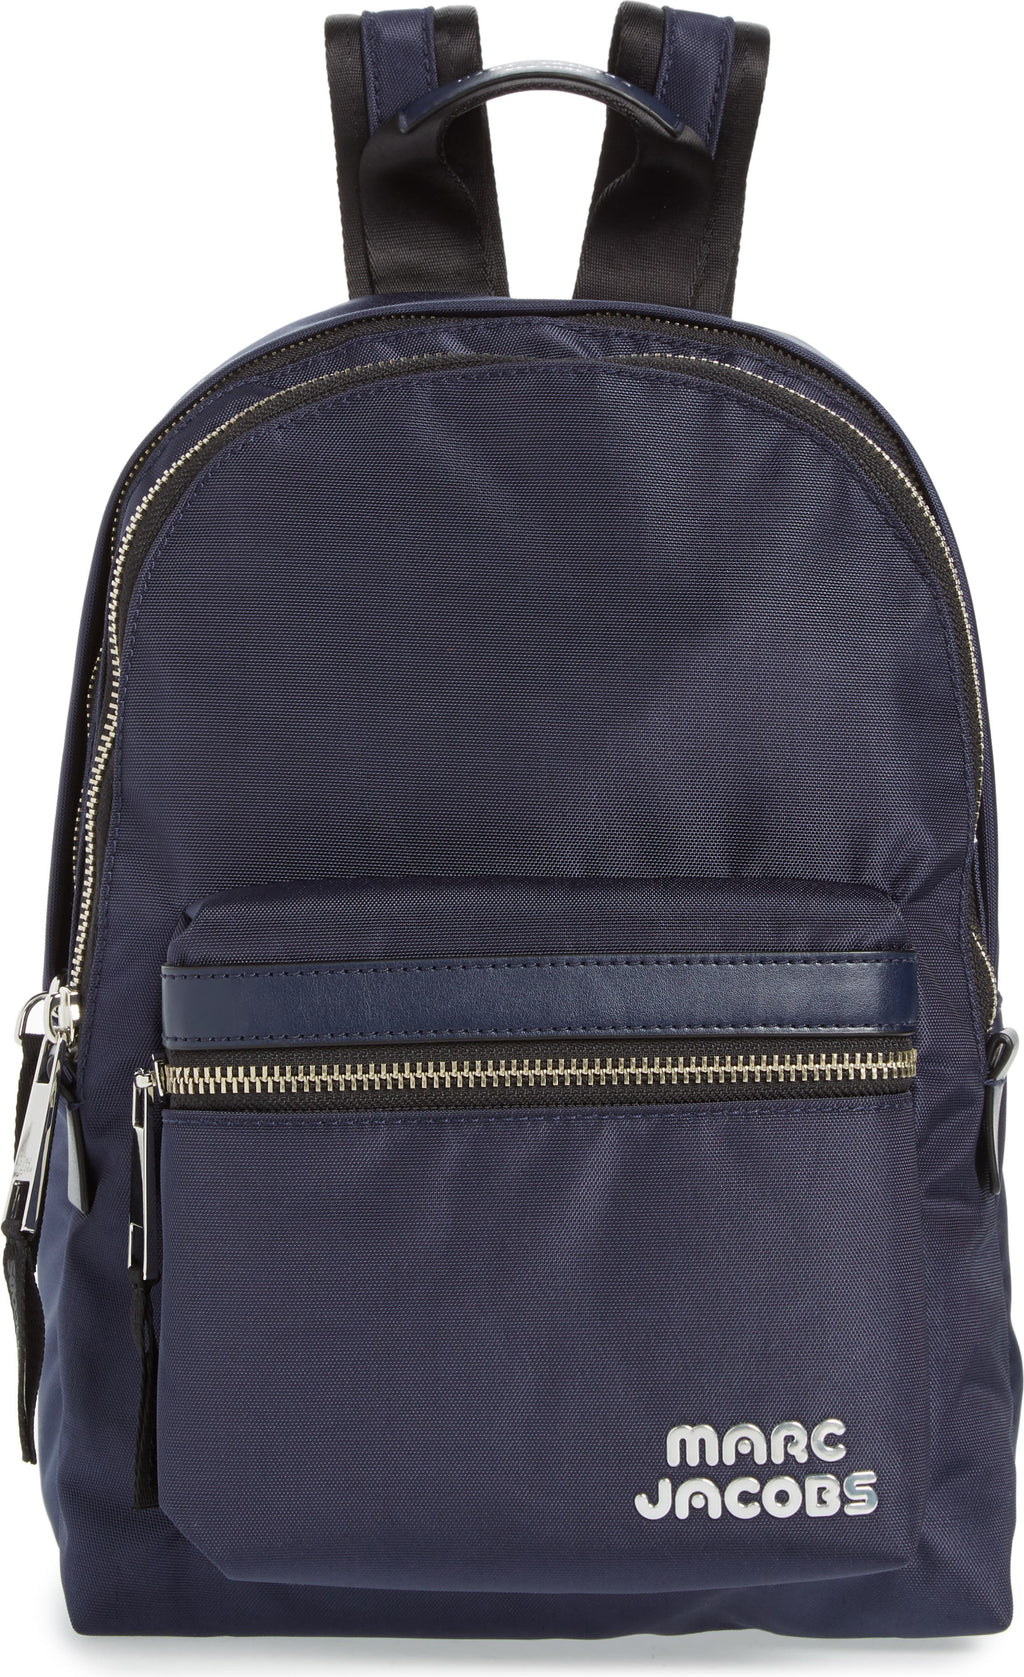 Marc Jacobs Medium Trek Nylon Backpack, Main, color, MIDNIGHT BLUE